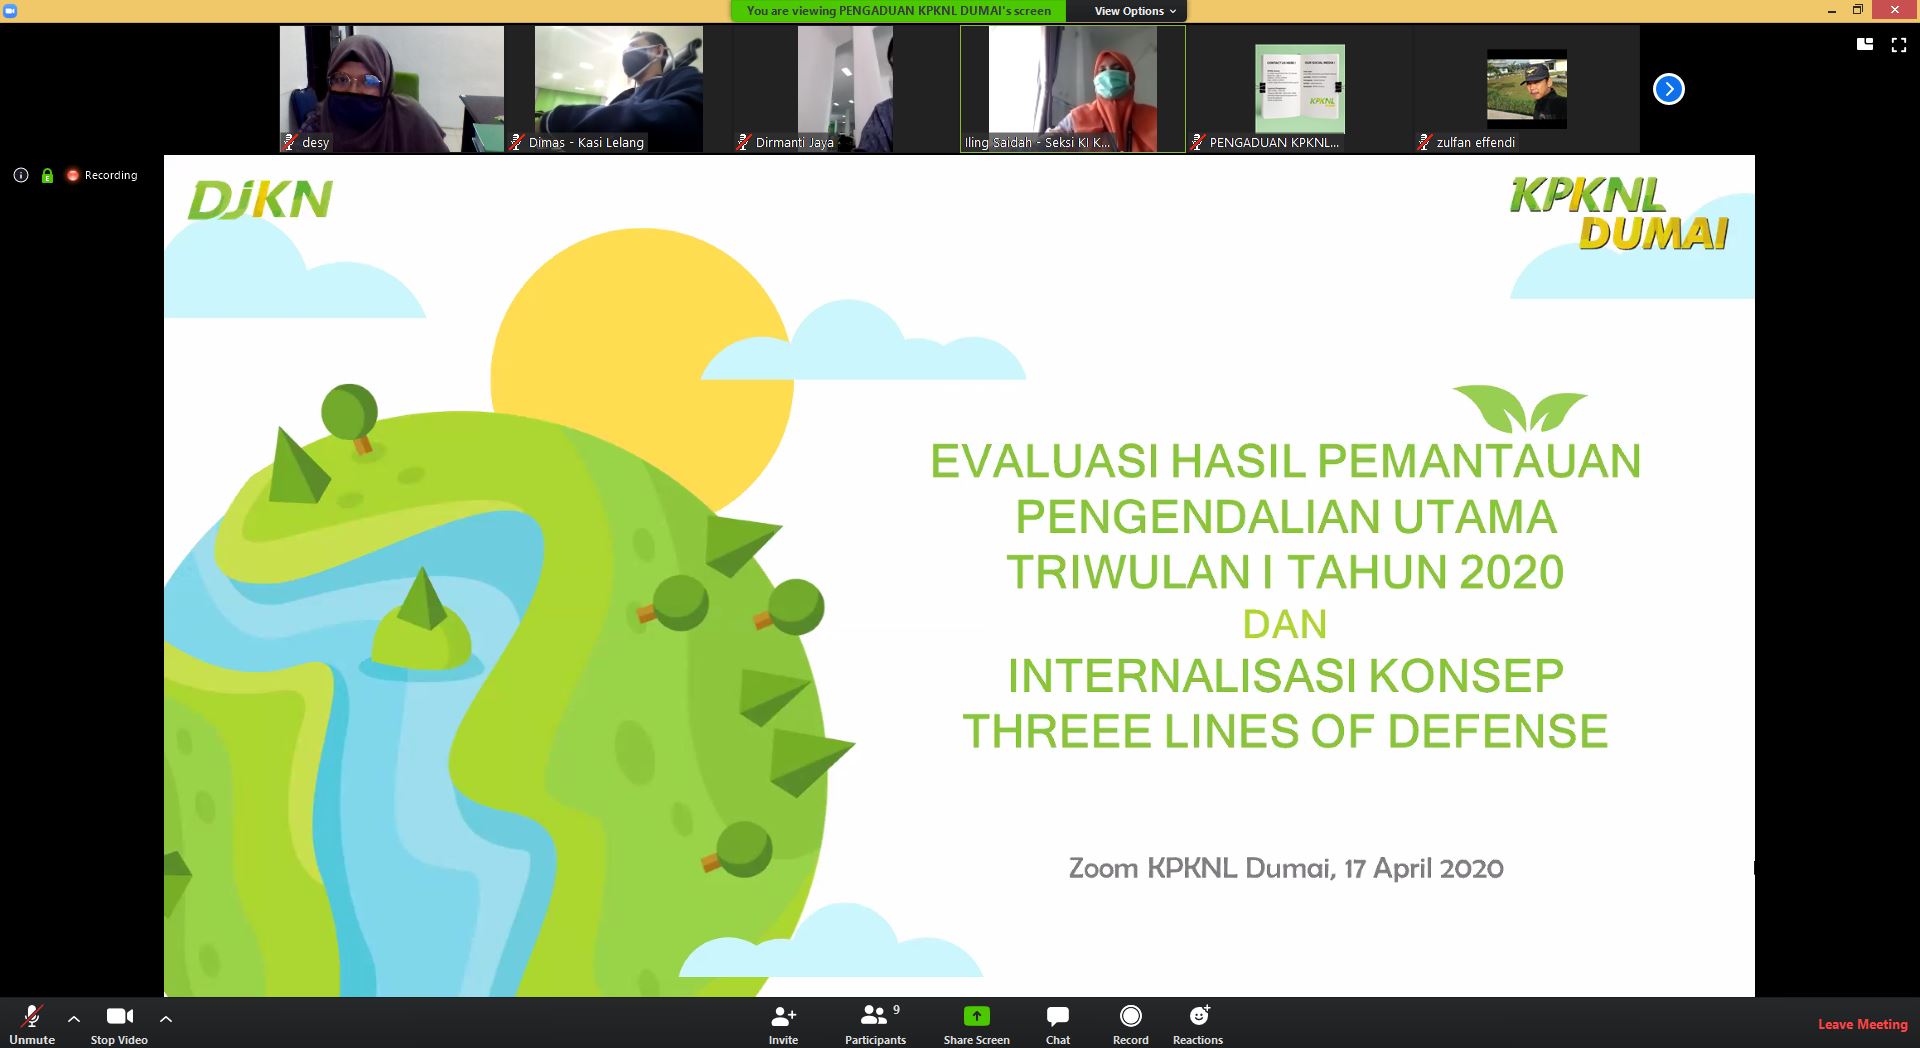 KPKNL Dumai Laksanakan Rapat Evaluasi Hasil Pemantauan Pengendalian Utama Triwulan I Tahun 2020 Secara Online